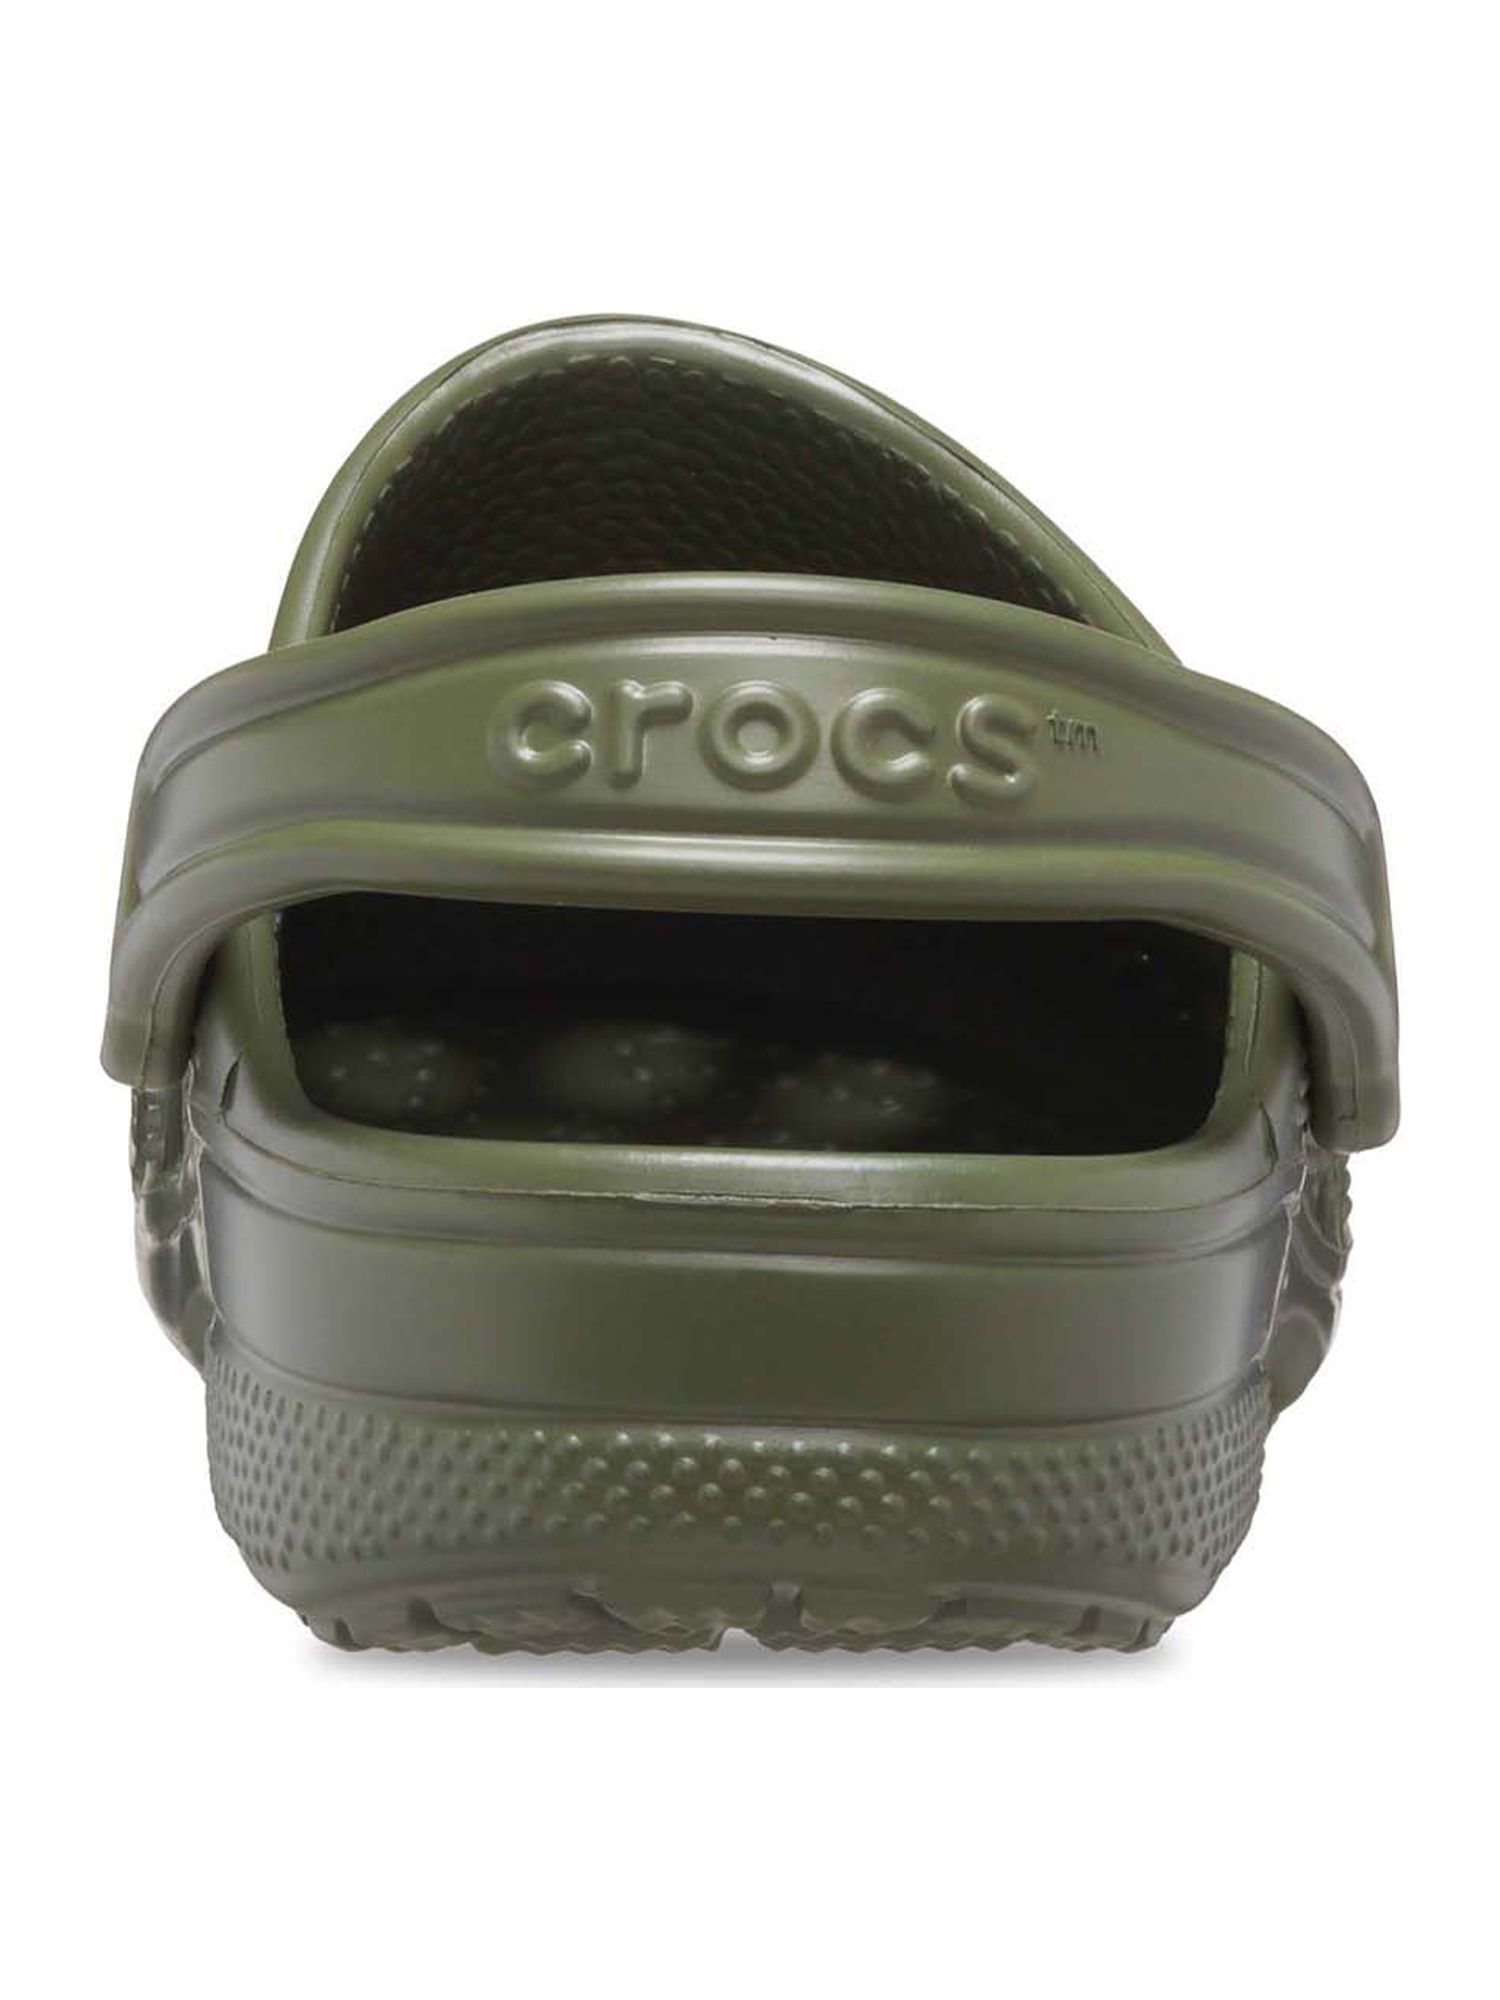 Crocs Unisex Baya Clog Sandals - image 5 of 6